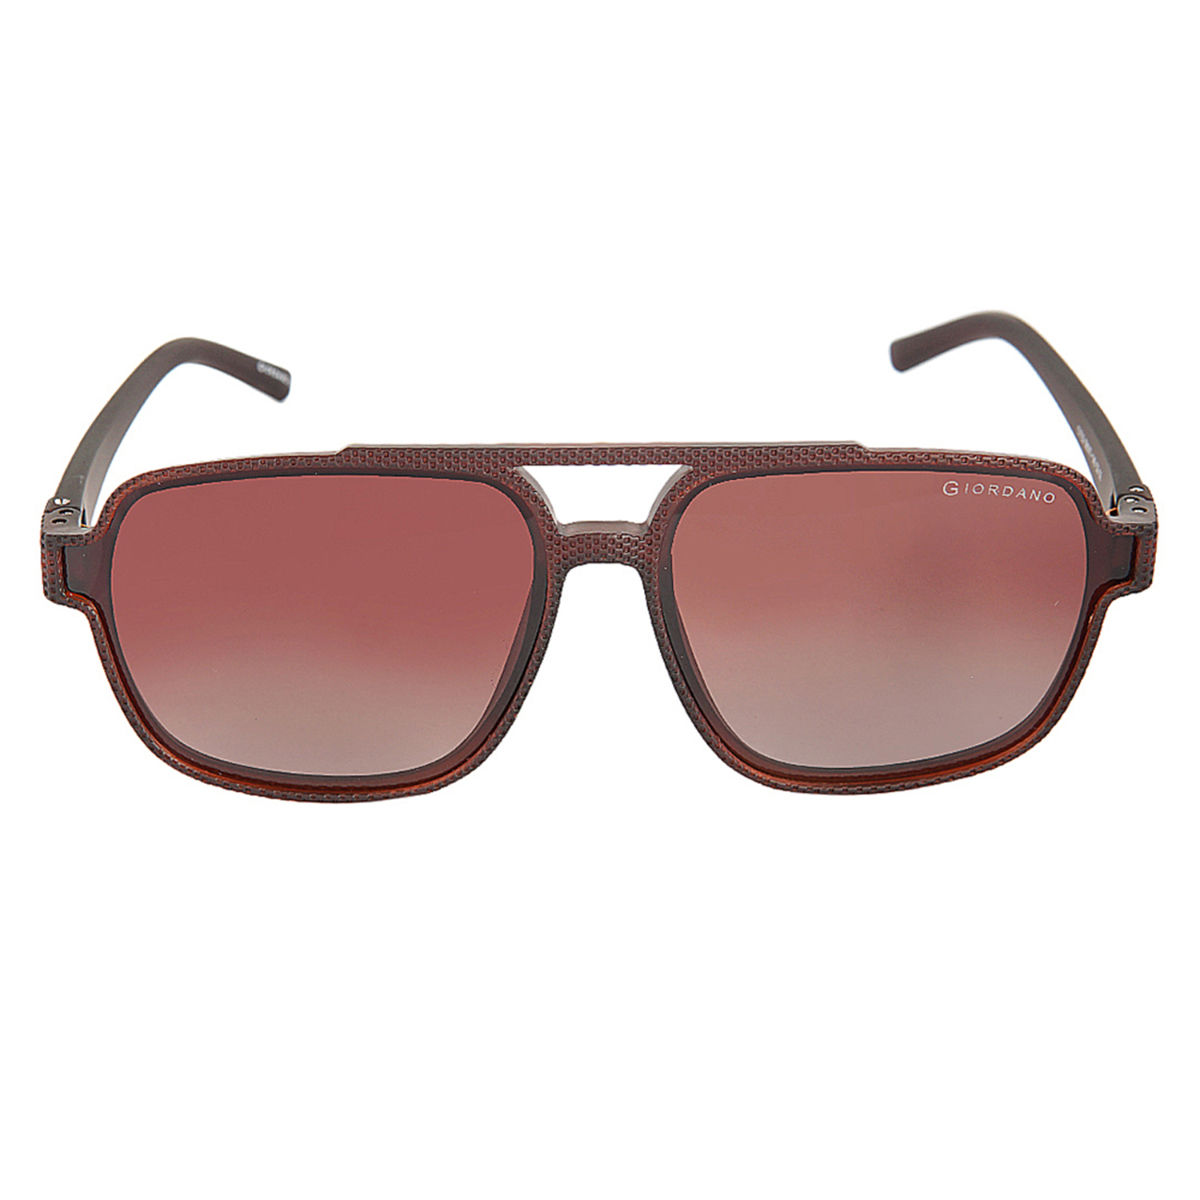 Giordano stylish and trendy sunglasses for men Polarized sunglasses 100% UV  Protected use for Men & Women